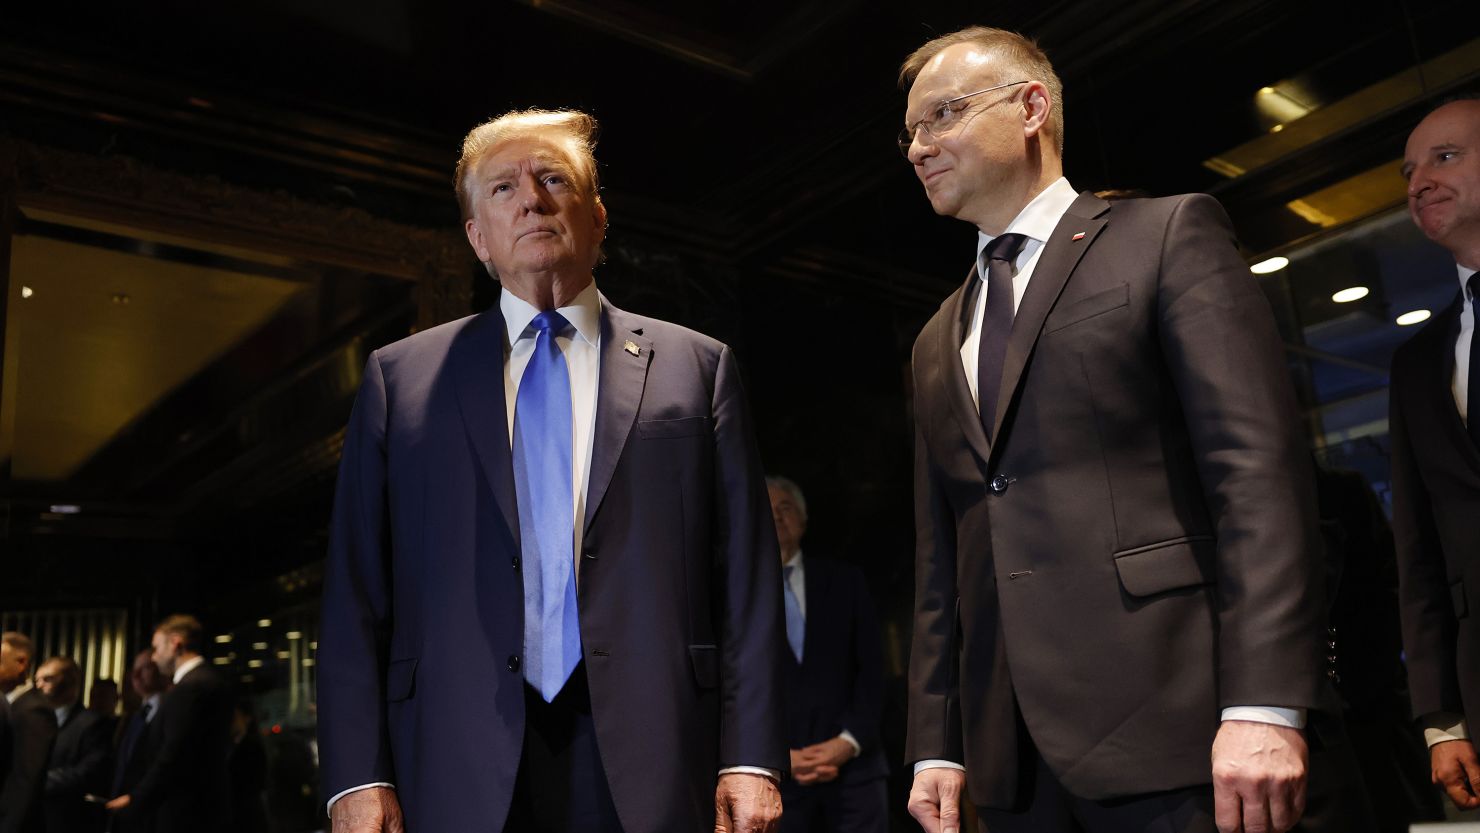 Donald Trump Extols Friendship with Poland’s President Andrzej Duda Following NYC Encounter